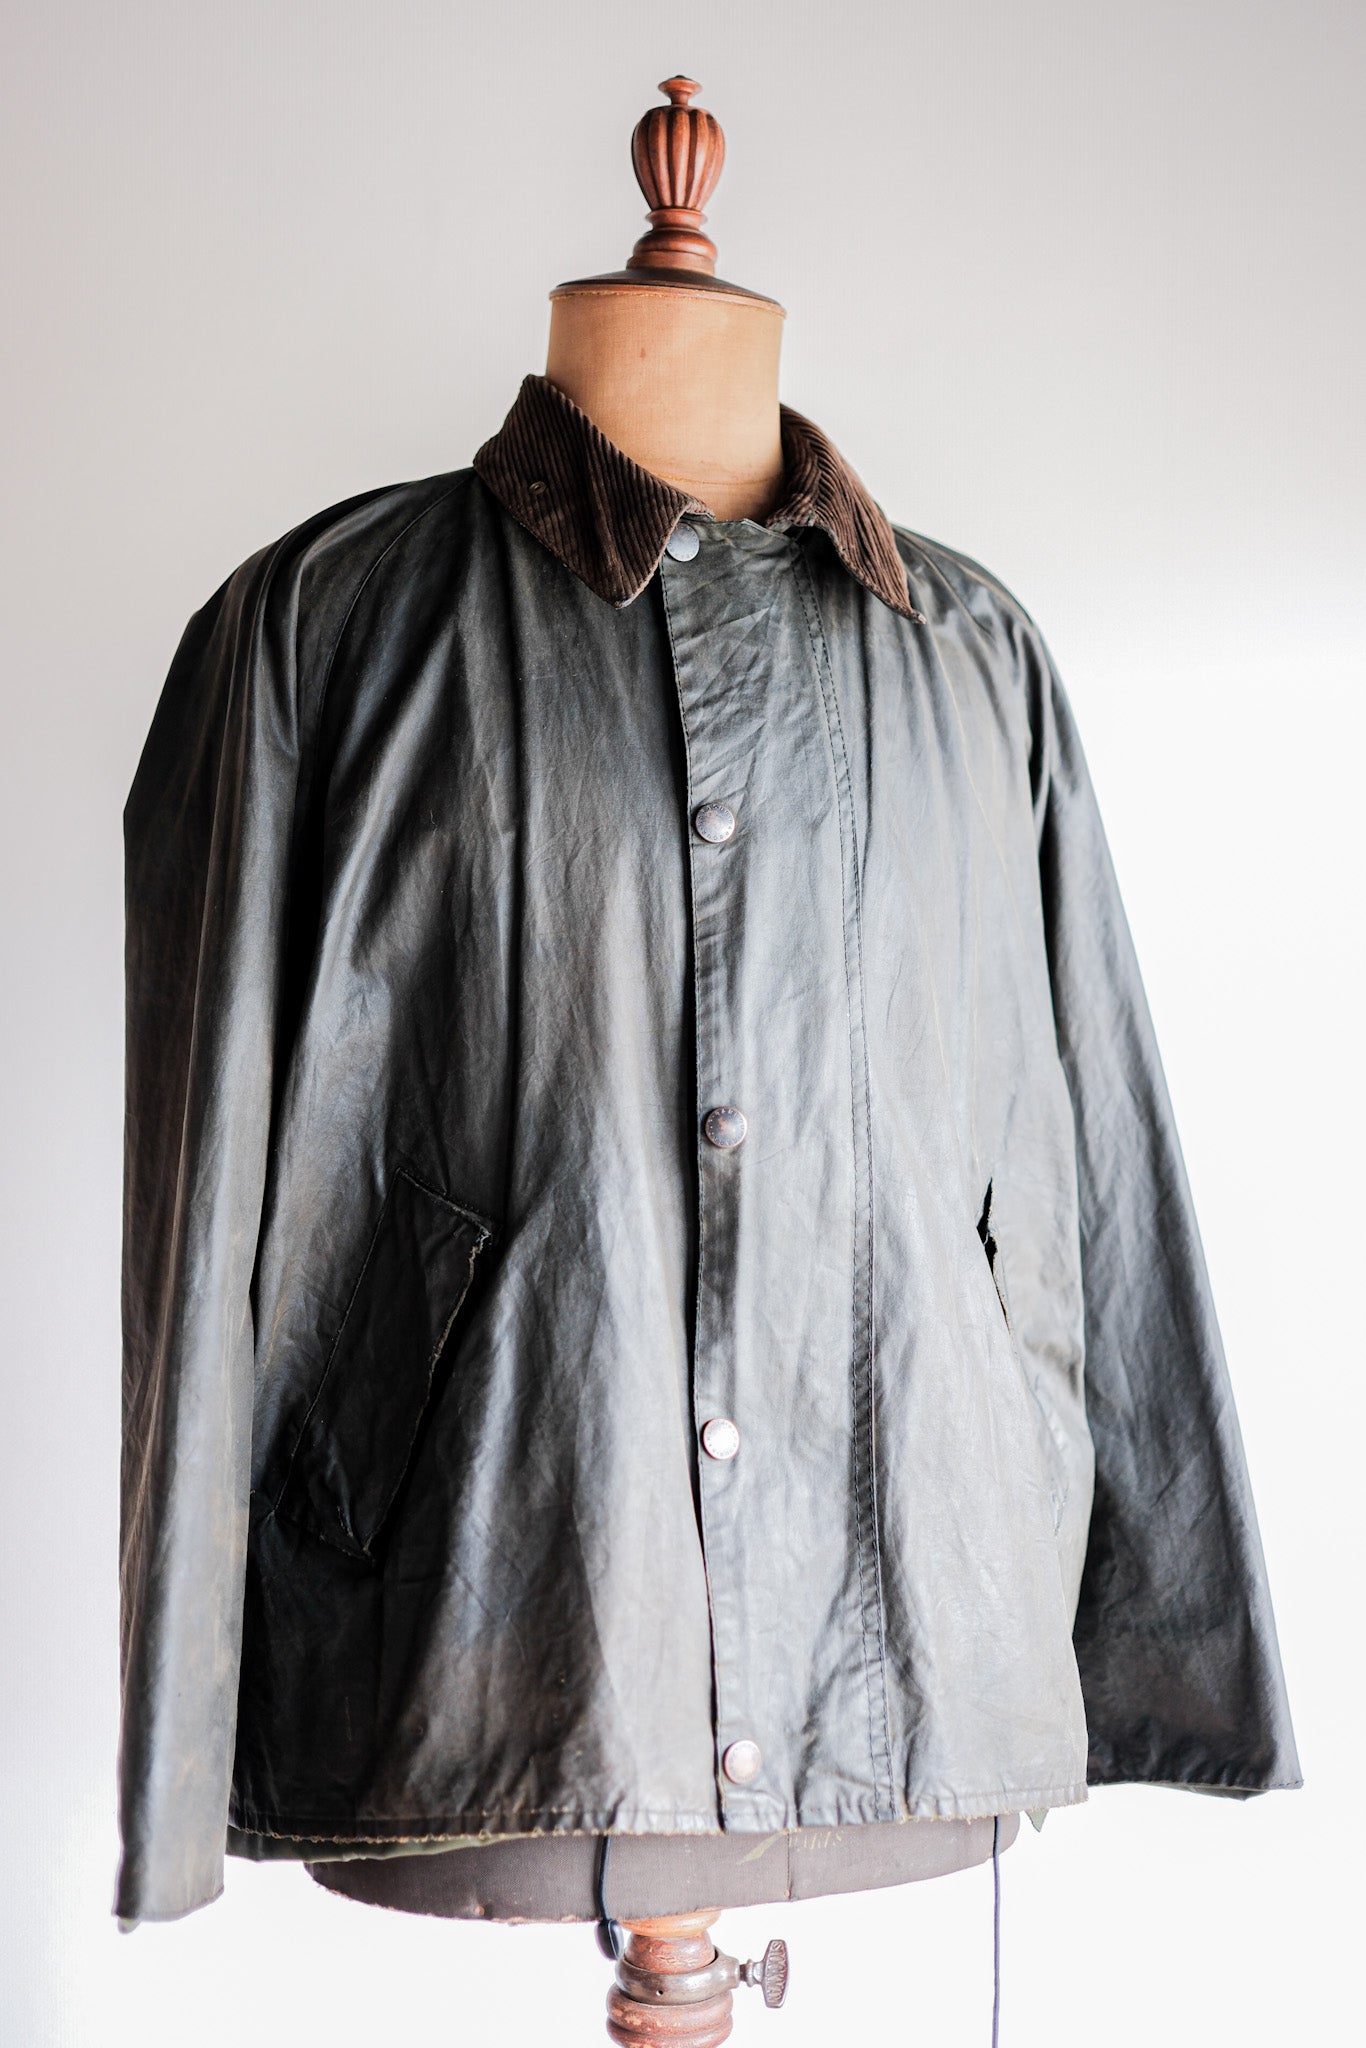 [~ 00's] Barbour vintage "Bearieu Jacket" 3 Crest Taille.42